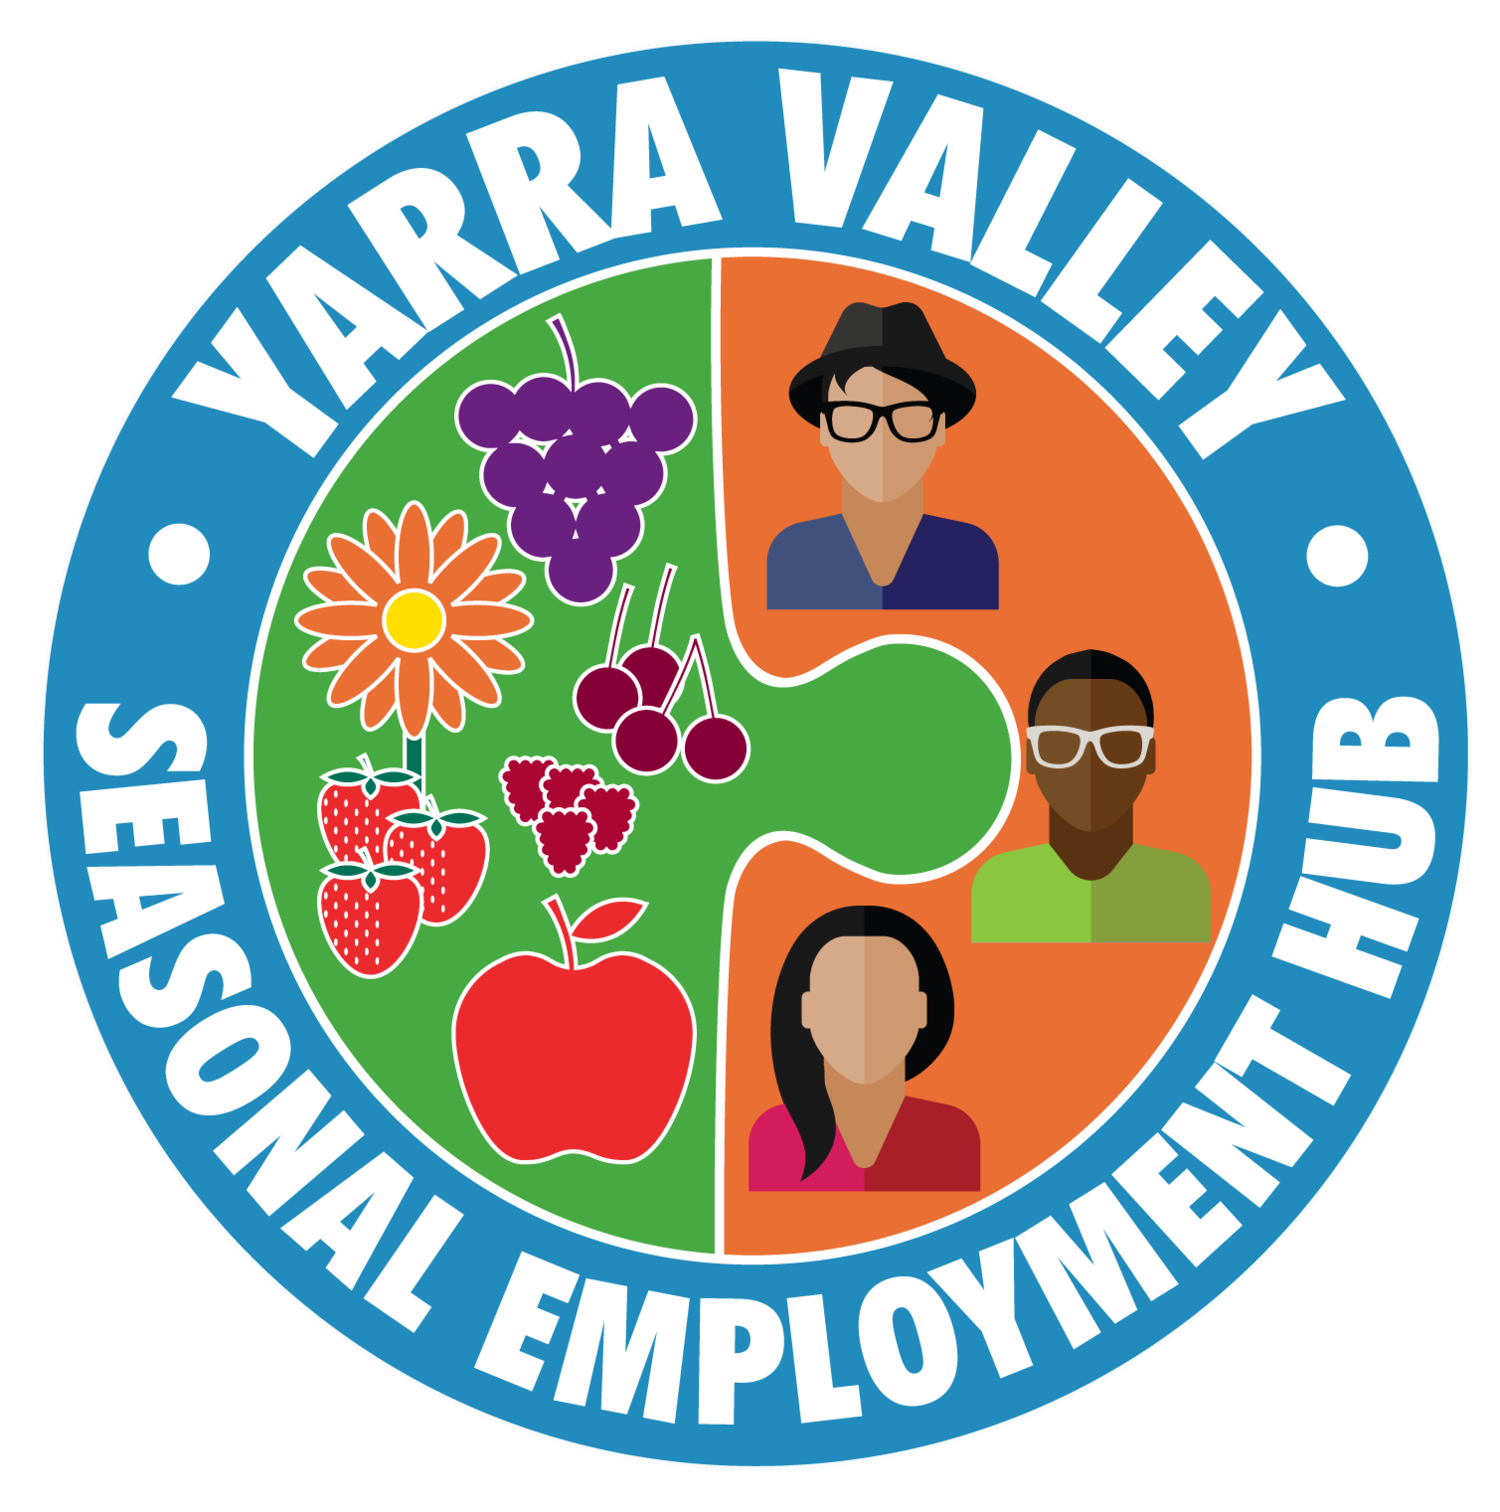 Yarra Valley Seasonal Employment Hub